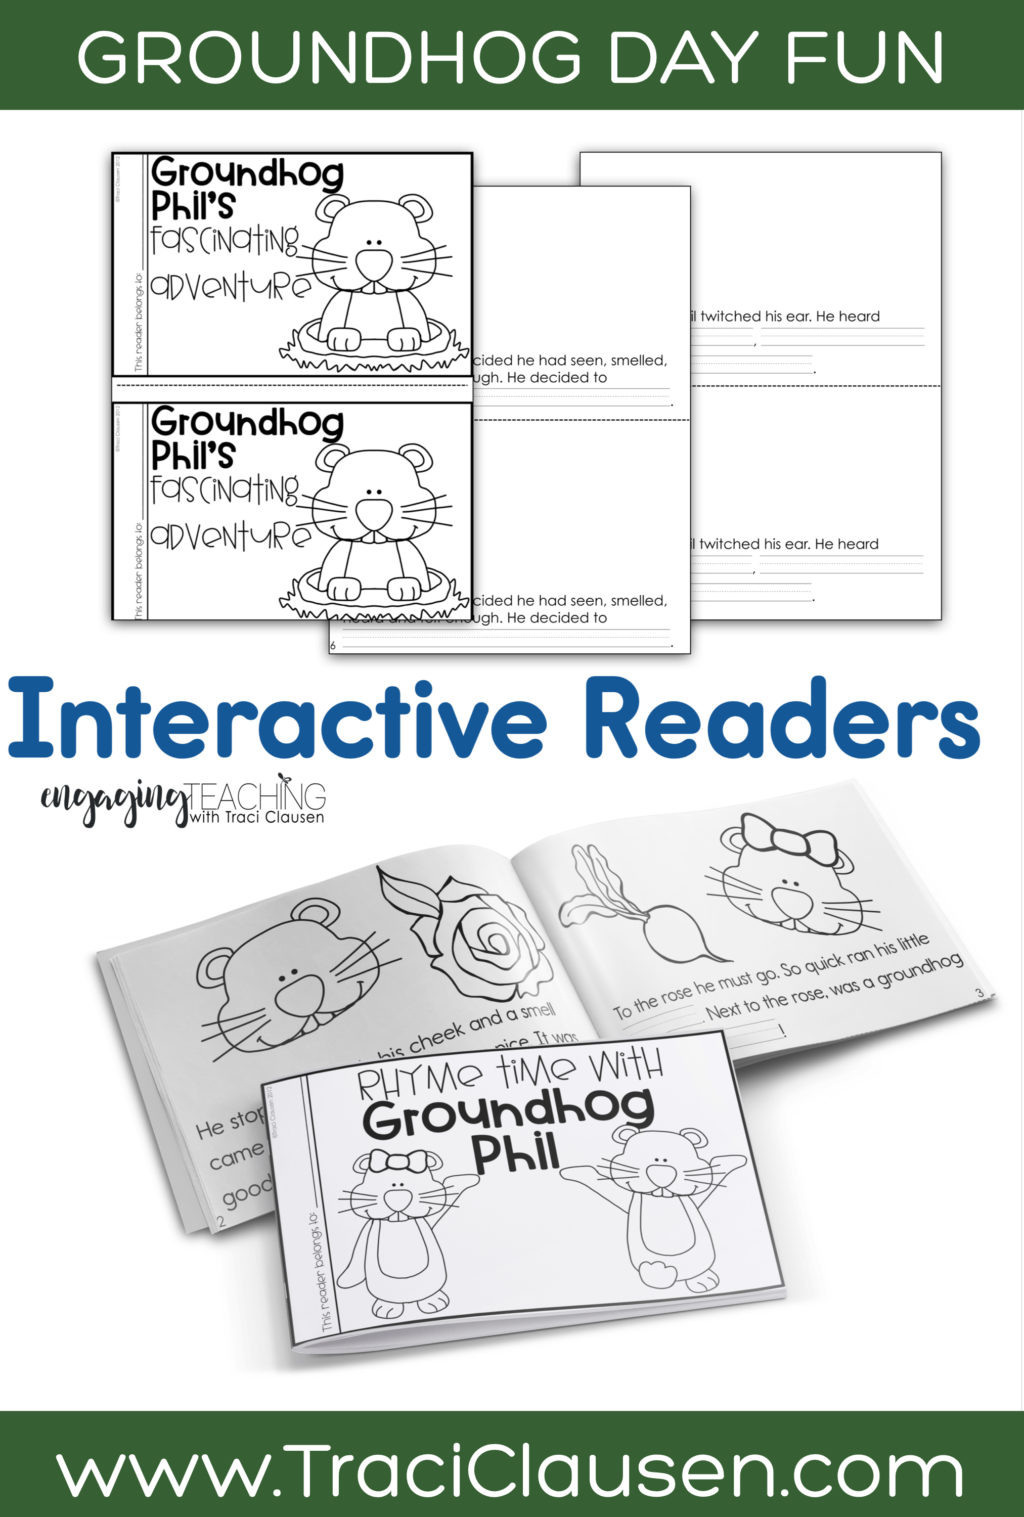 Groundhog Phil Interactive Readers